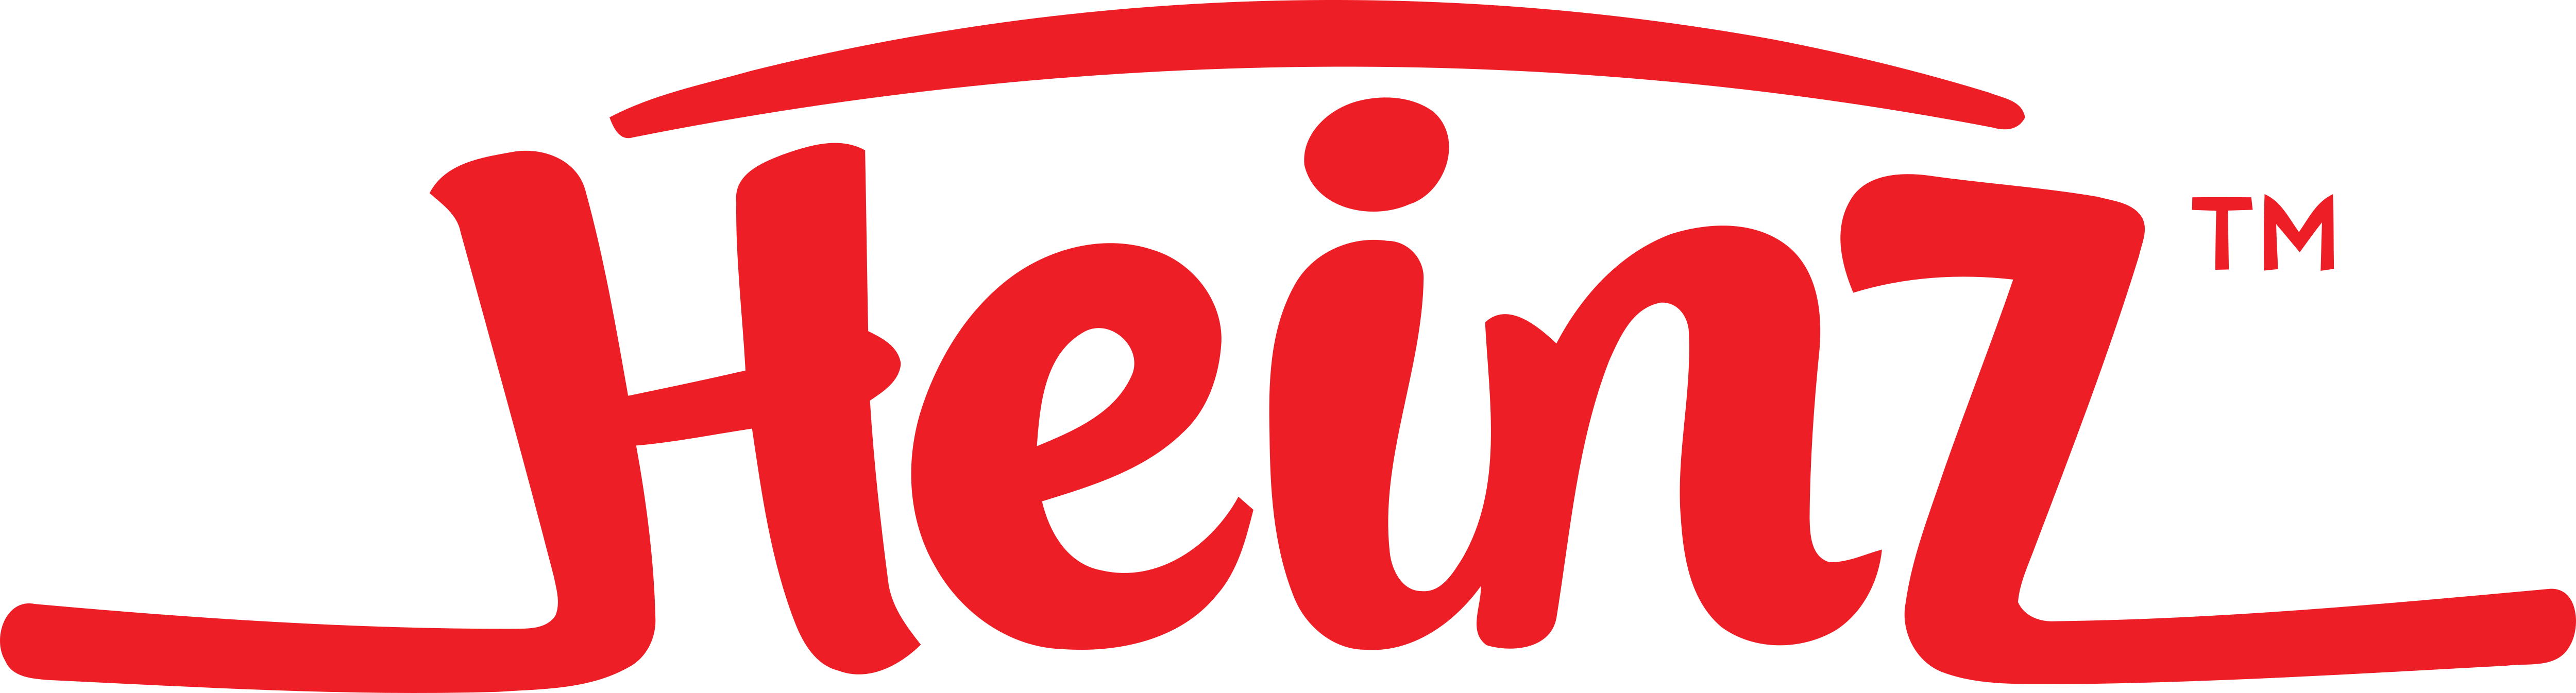 Heinz Logo Transparent Background